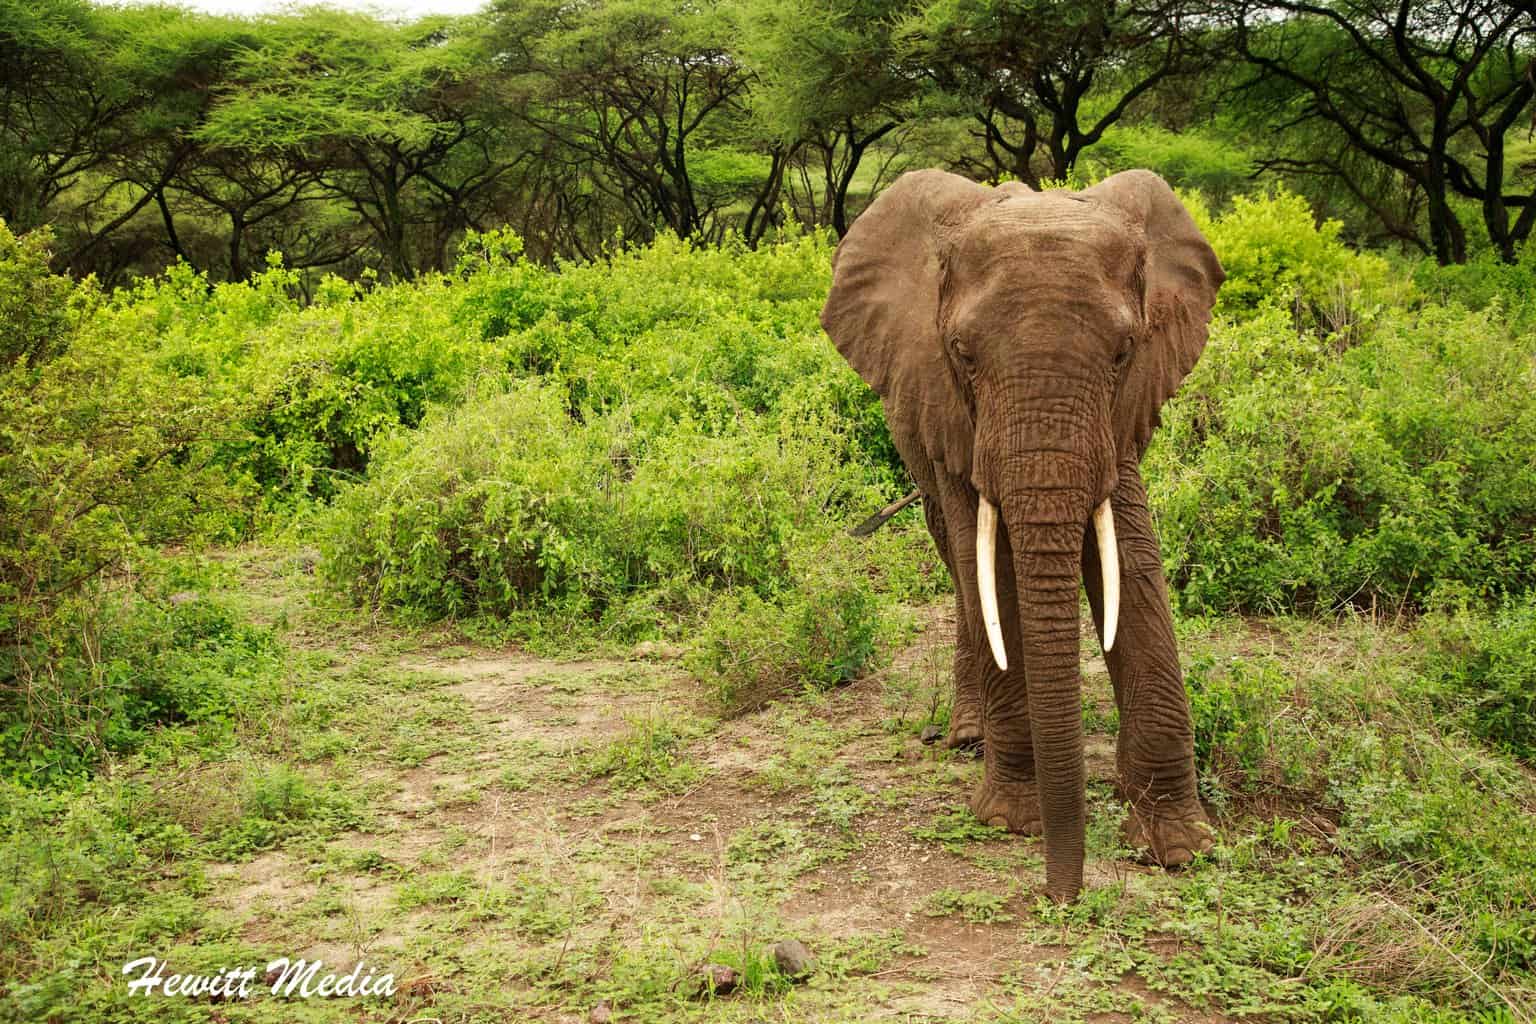 Lake Manyara Safari - Bull elephant we saw while on safari